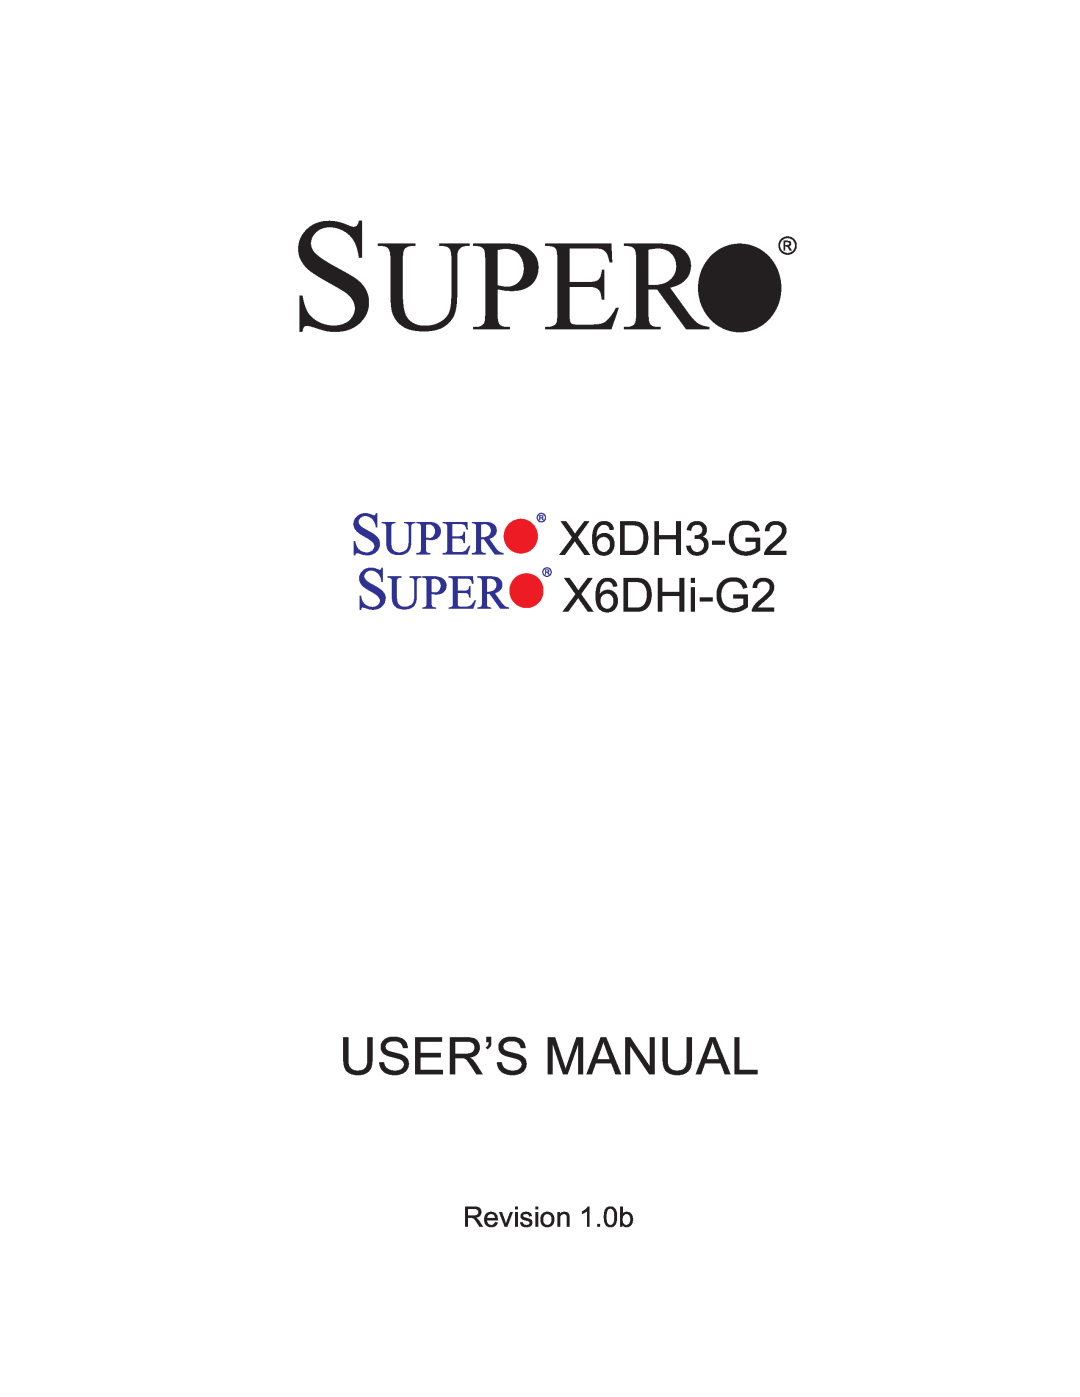 SUPER MICRO Computer user manual Revision 1.0b, Super, User’S Manual, X6DH3-G2 X6DHi-G2 